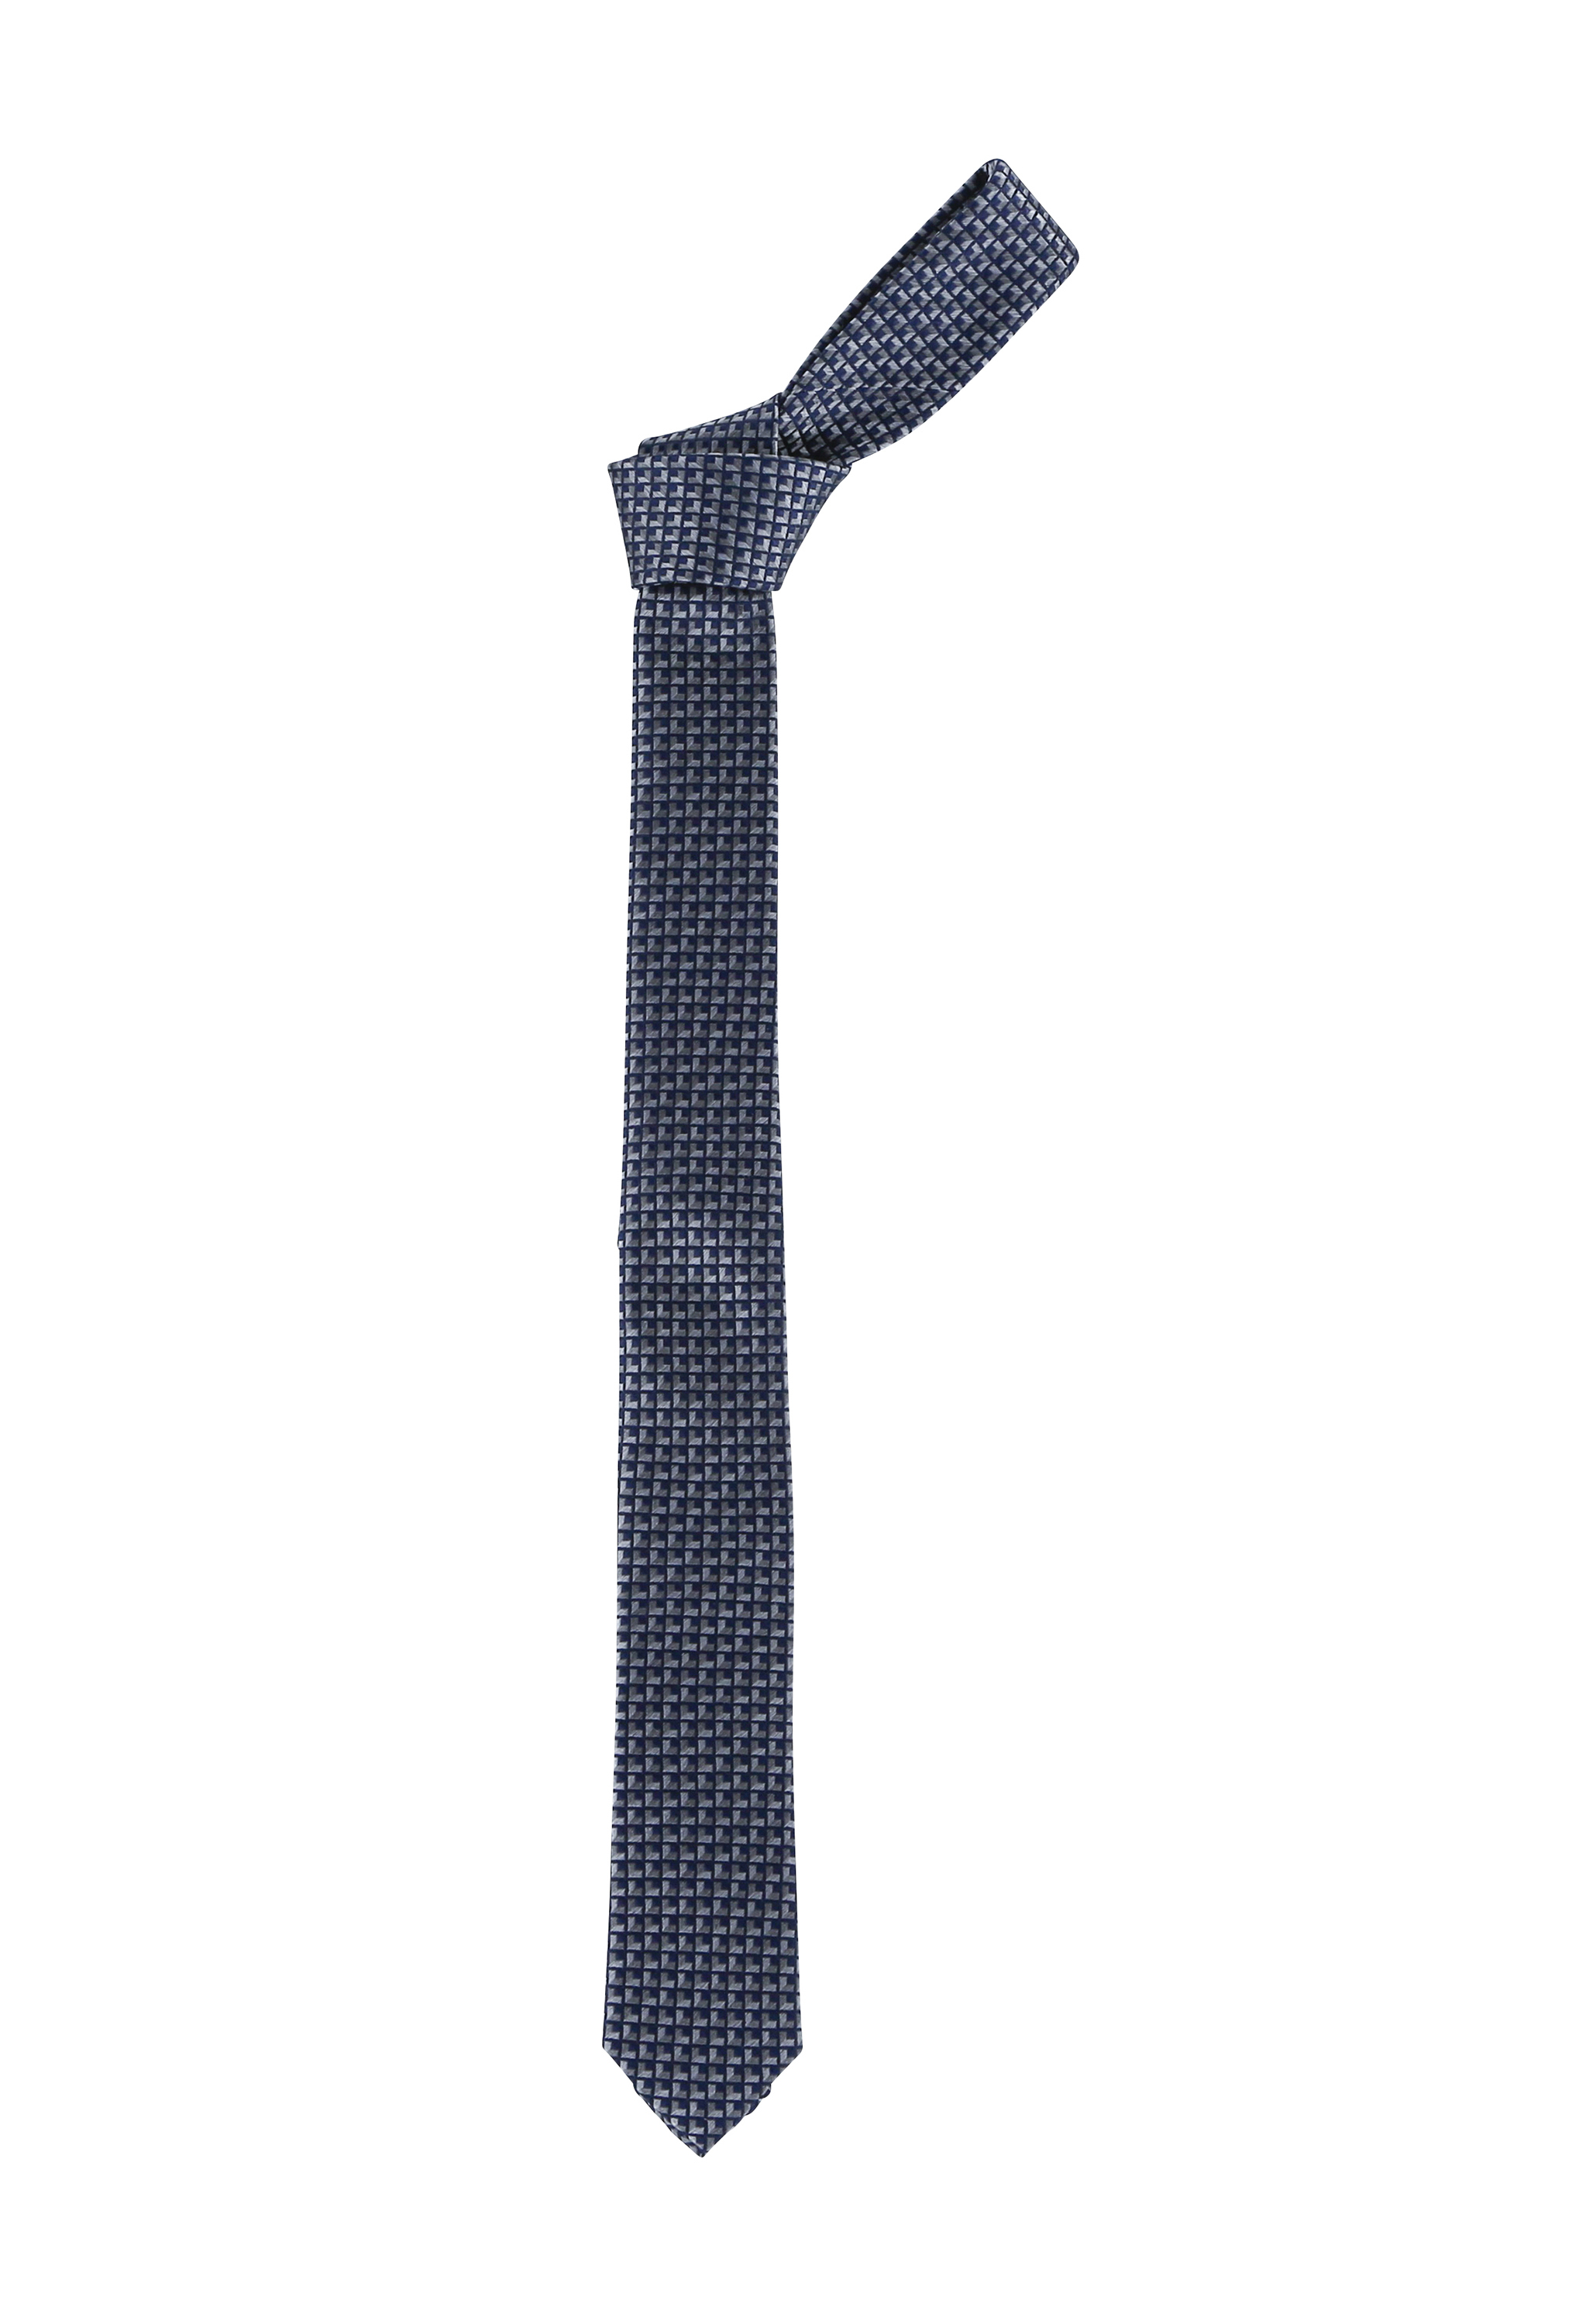 cravate soie tissee losange bleue